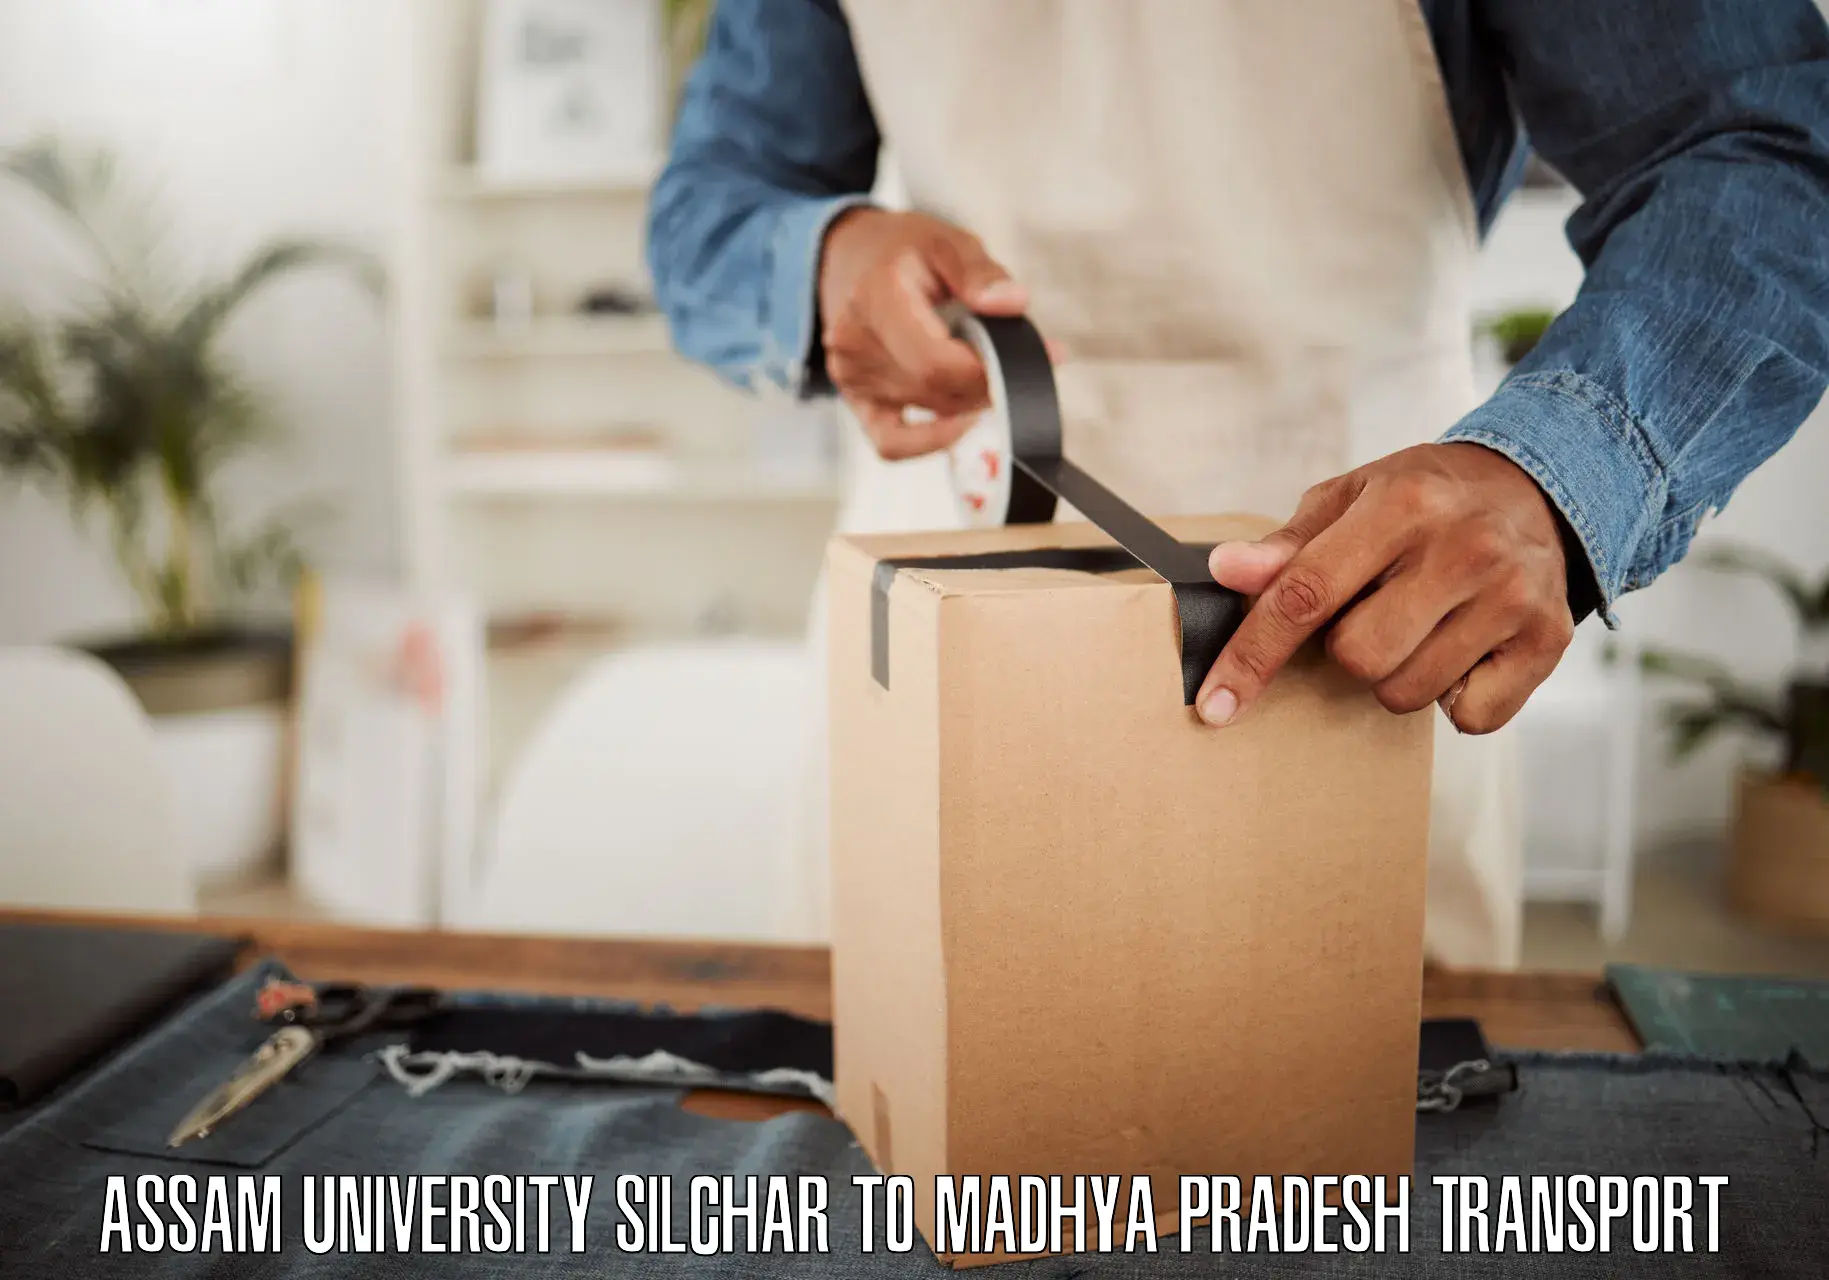 Transport in sharing Assam University Silchar to Majhgawa